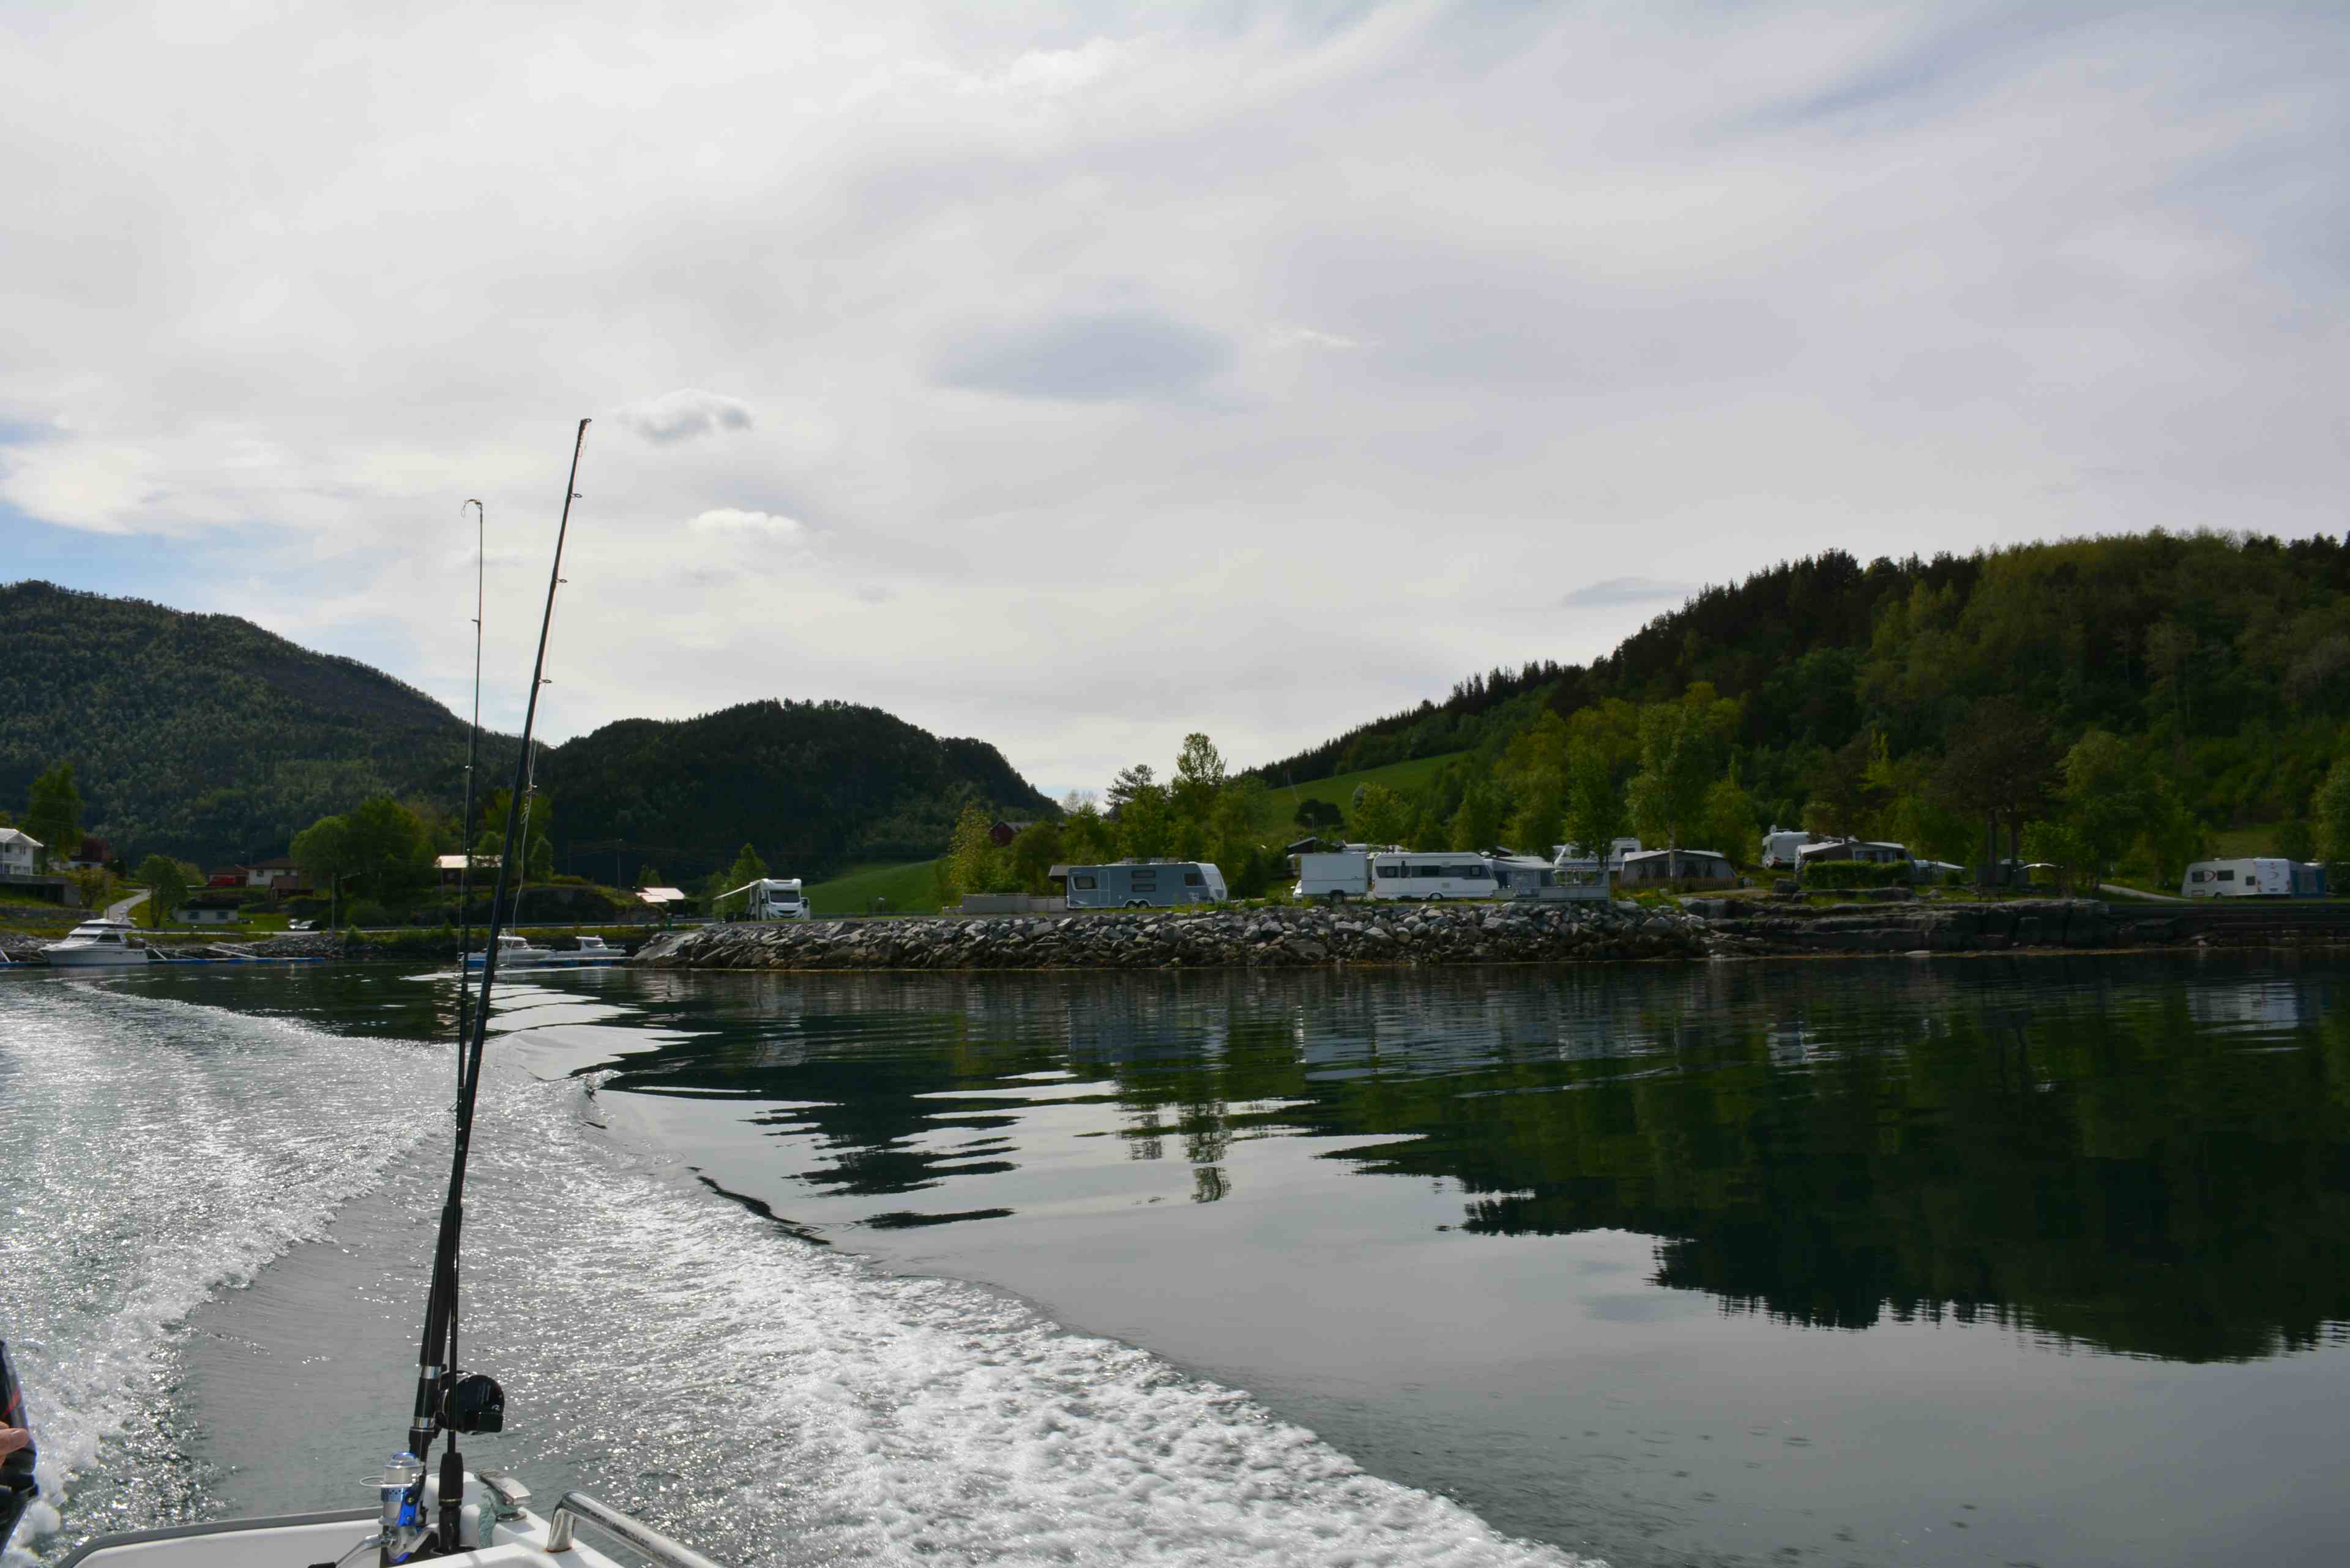 Fishing at Saltkjelsnes camping